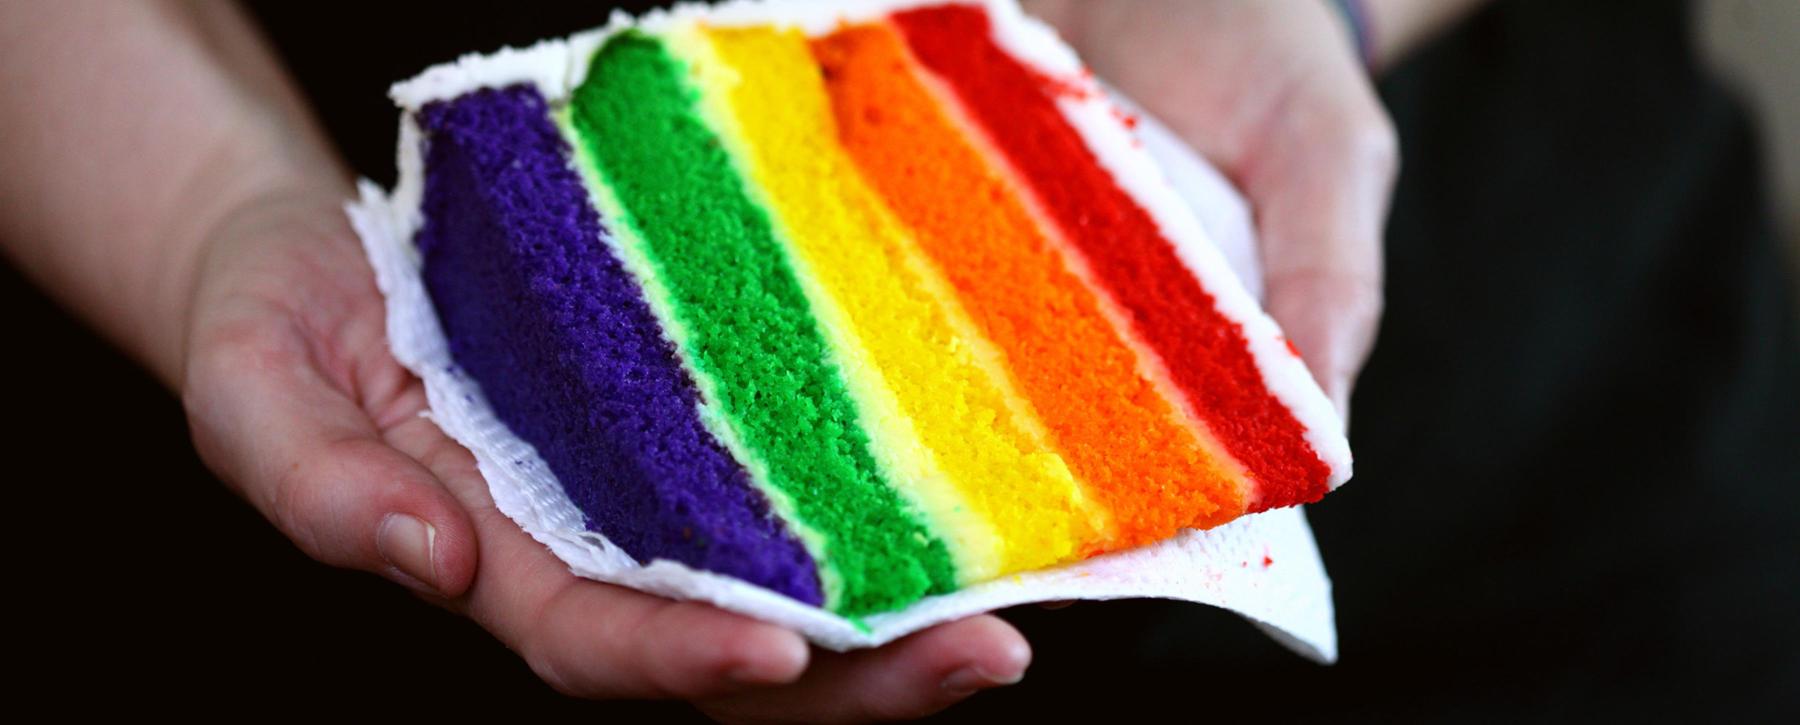 a piece of pride cake